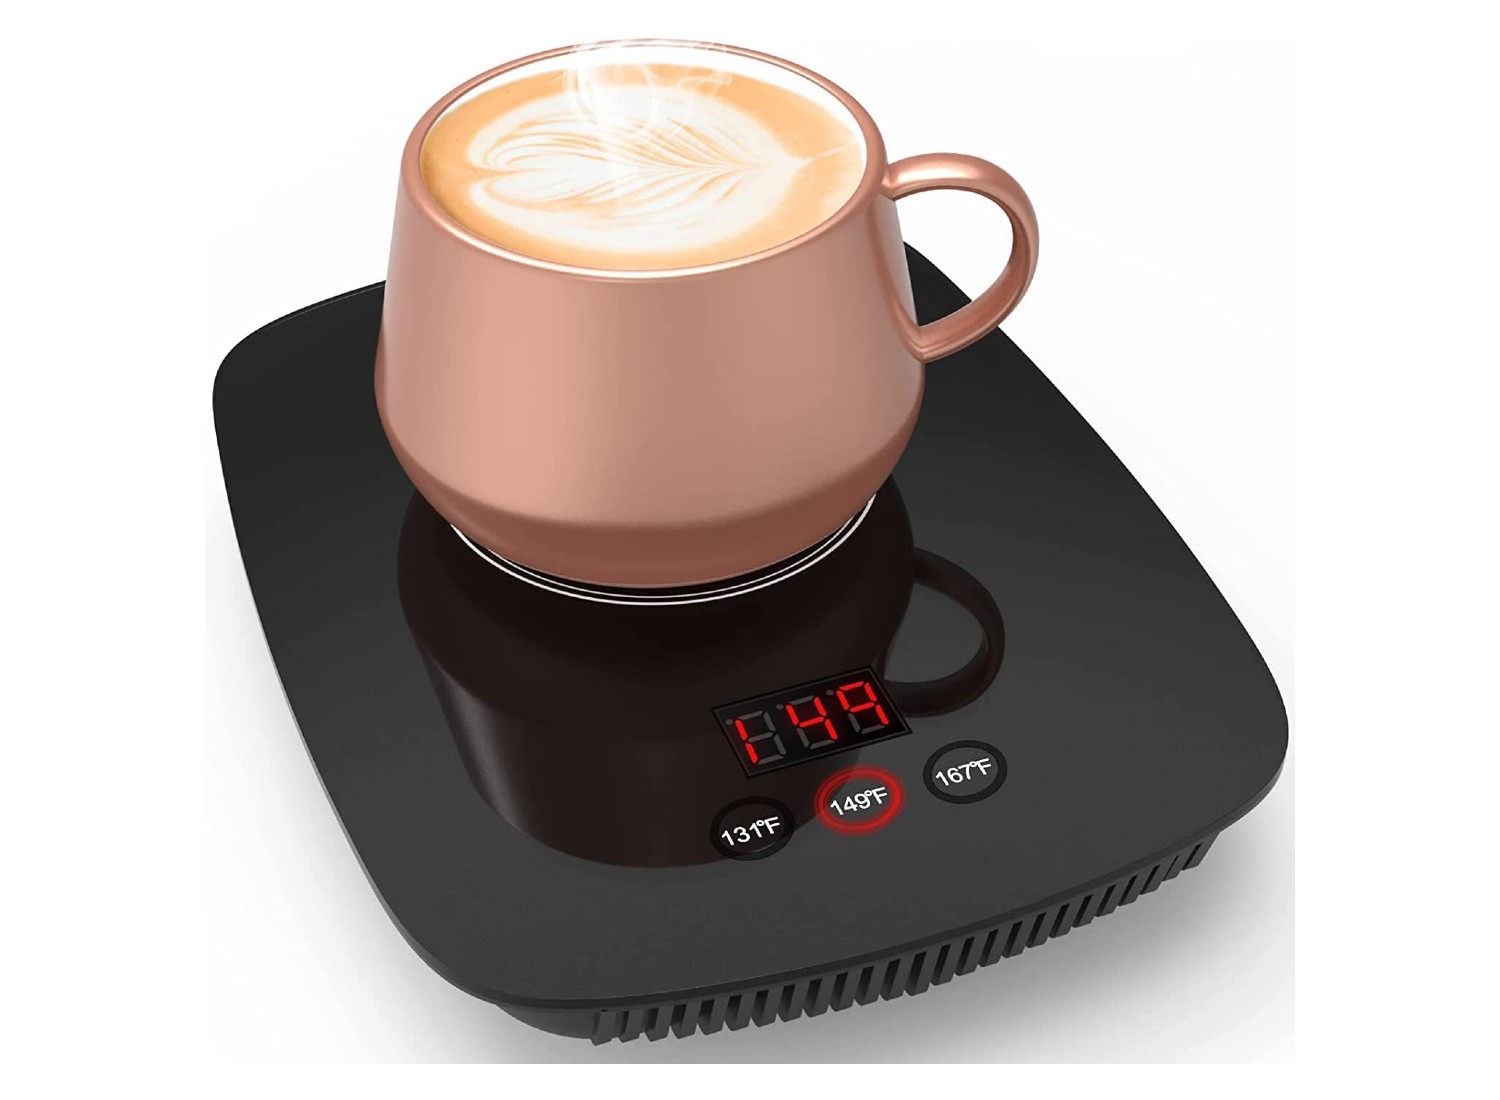 7 Best Coffee Mug Warmers on The Market in 2022 